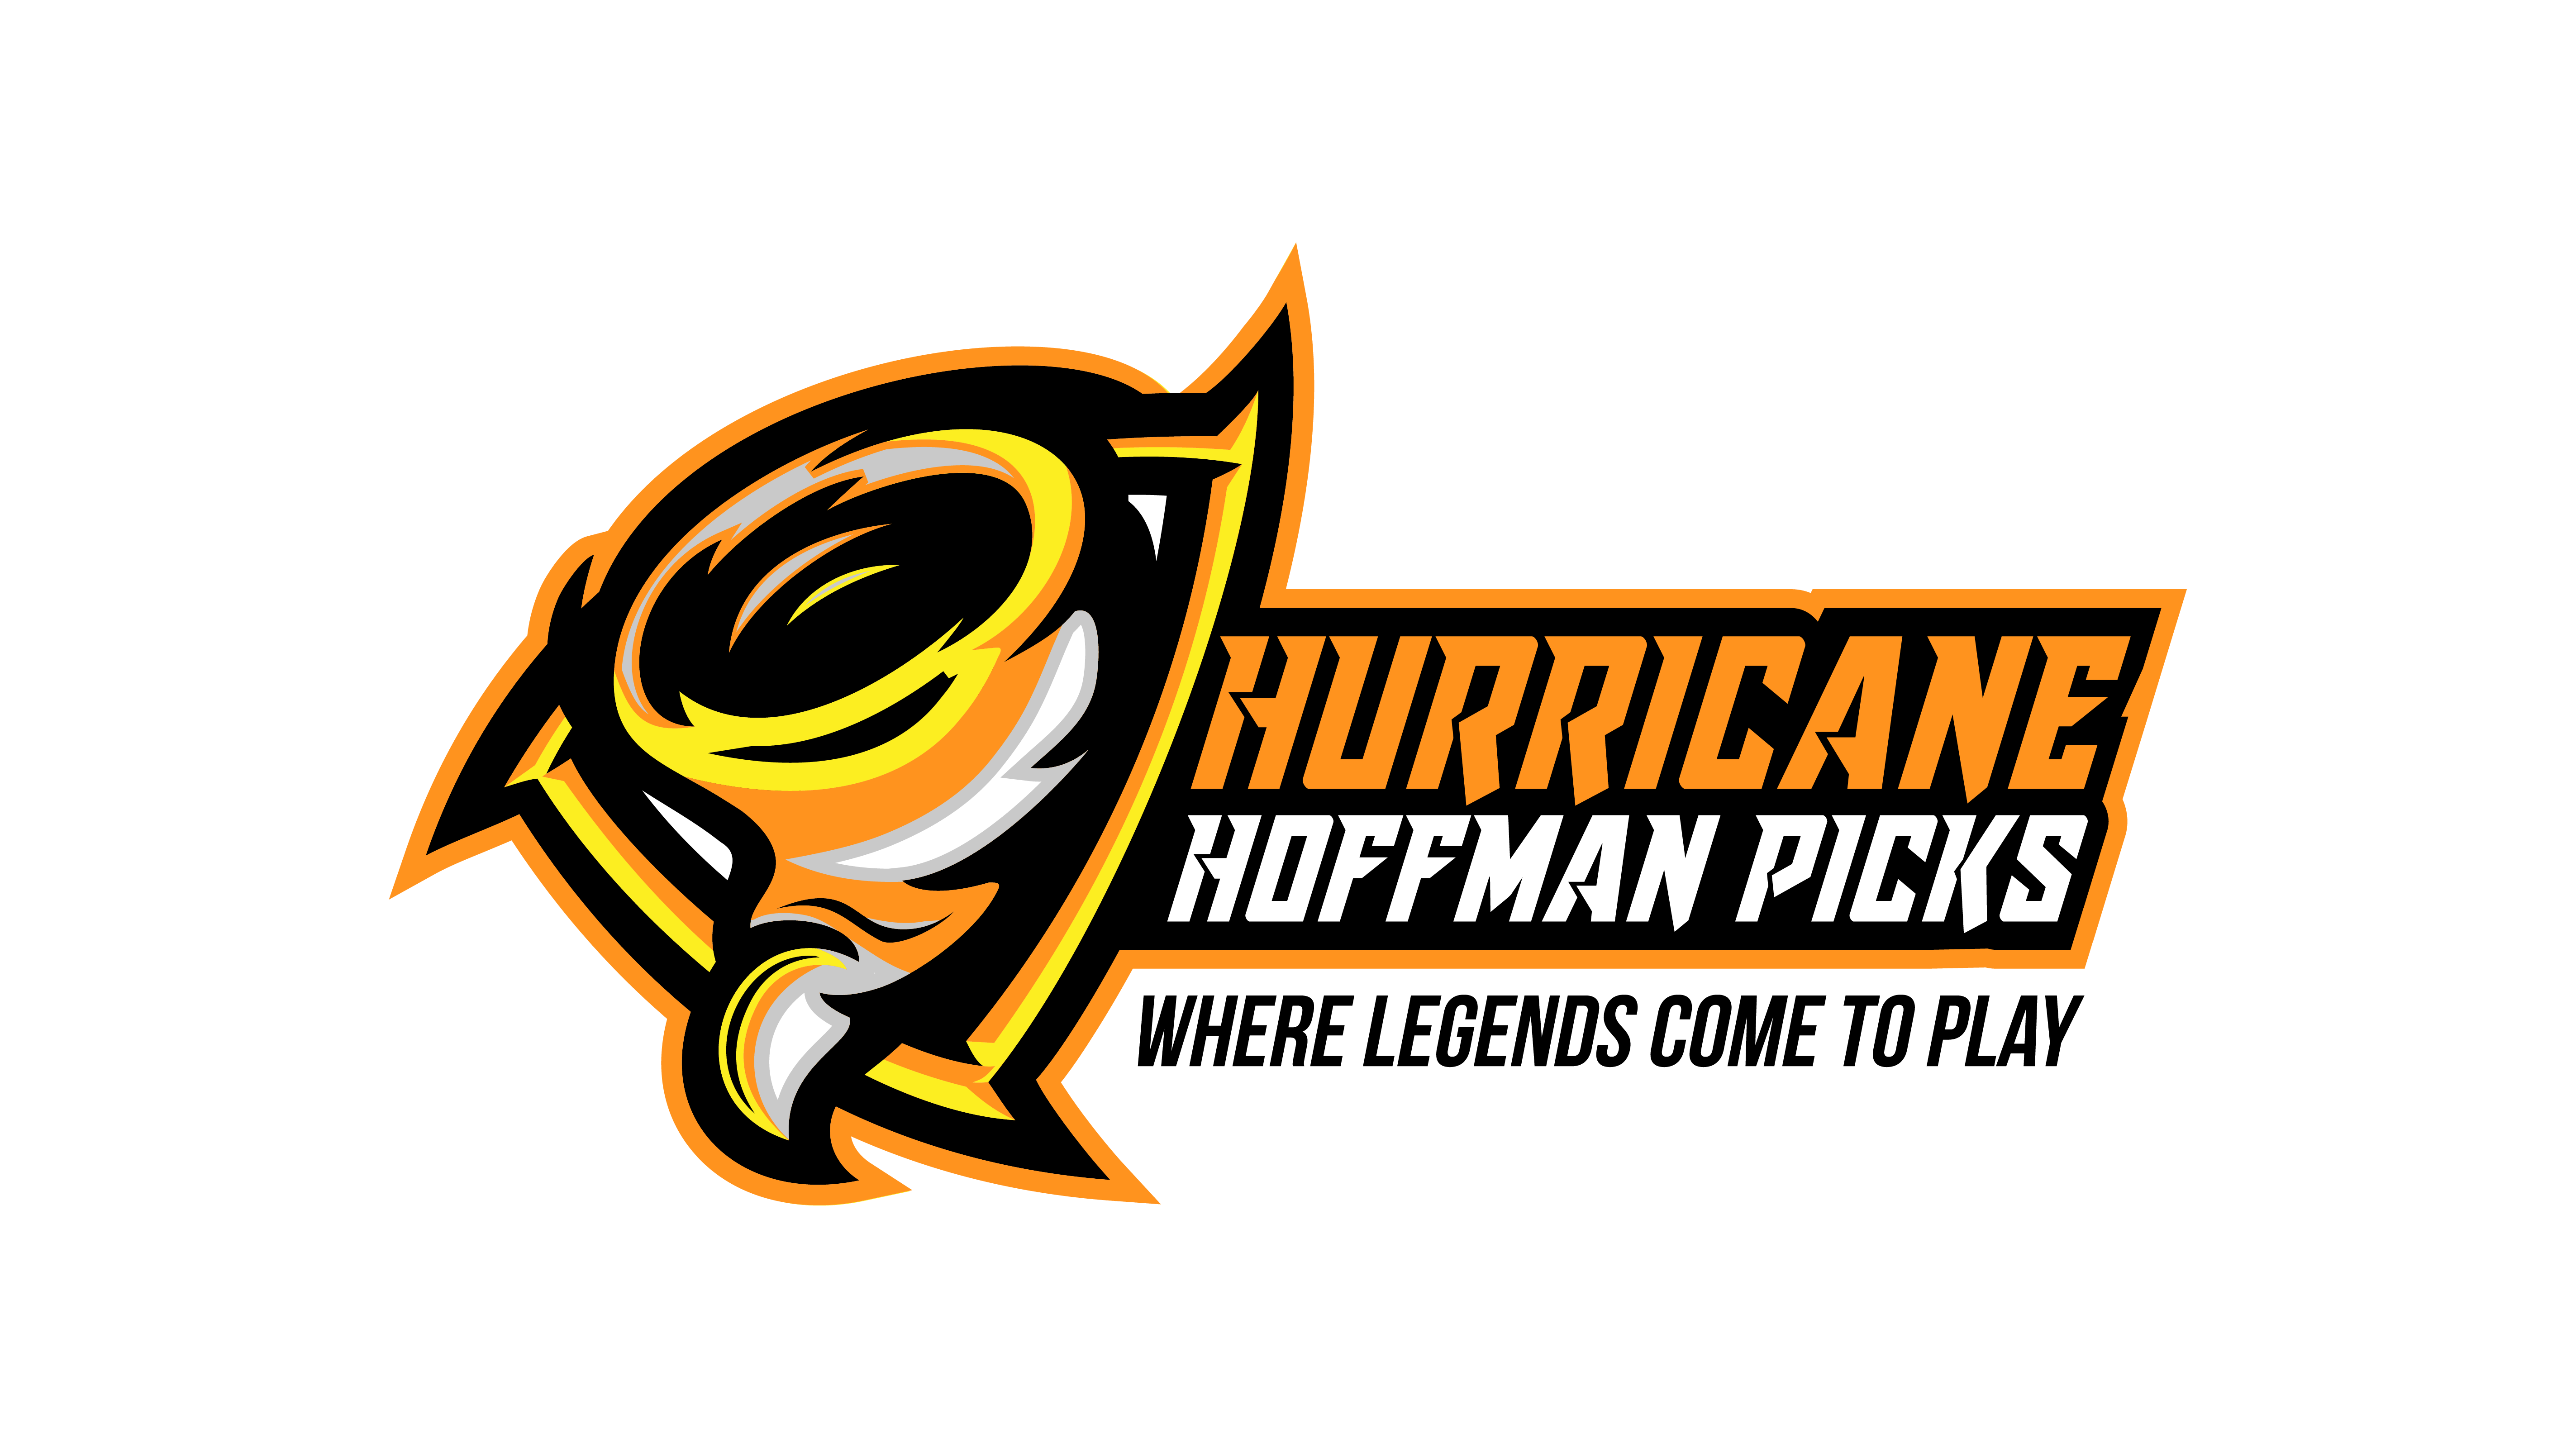 hurricane hoffman picks logo sports handicappers